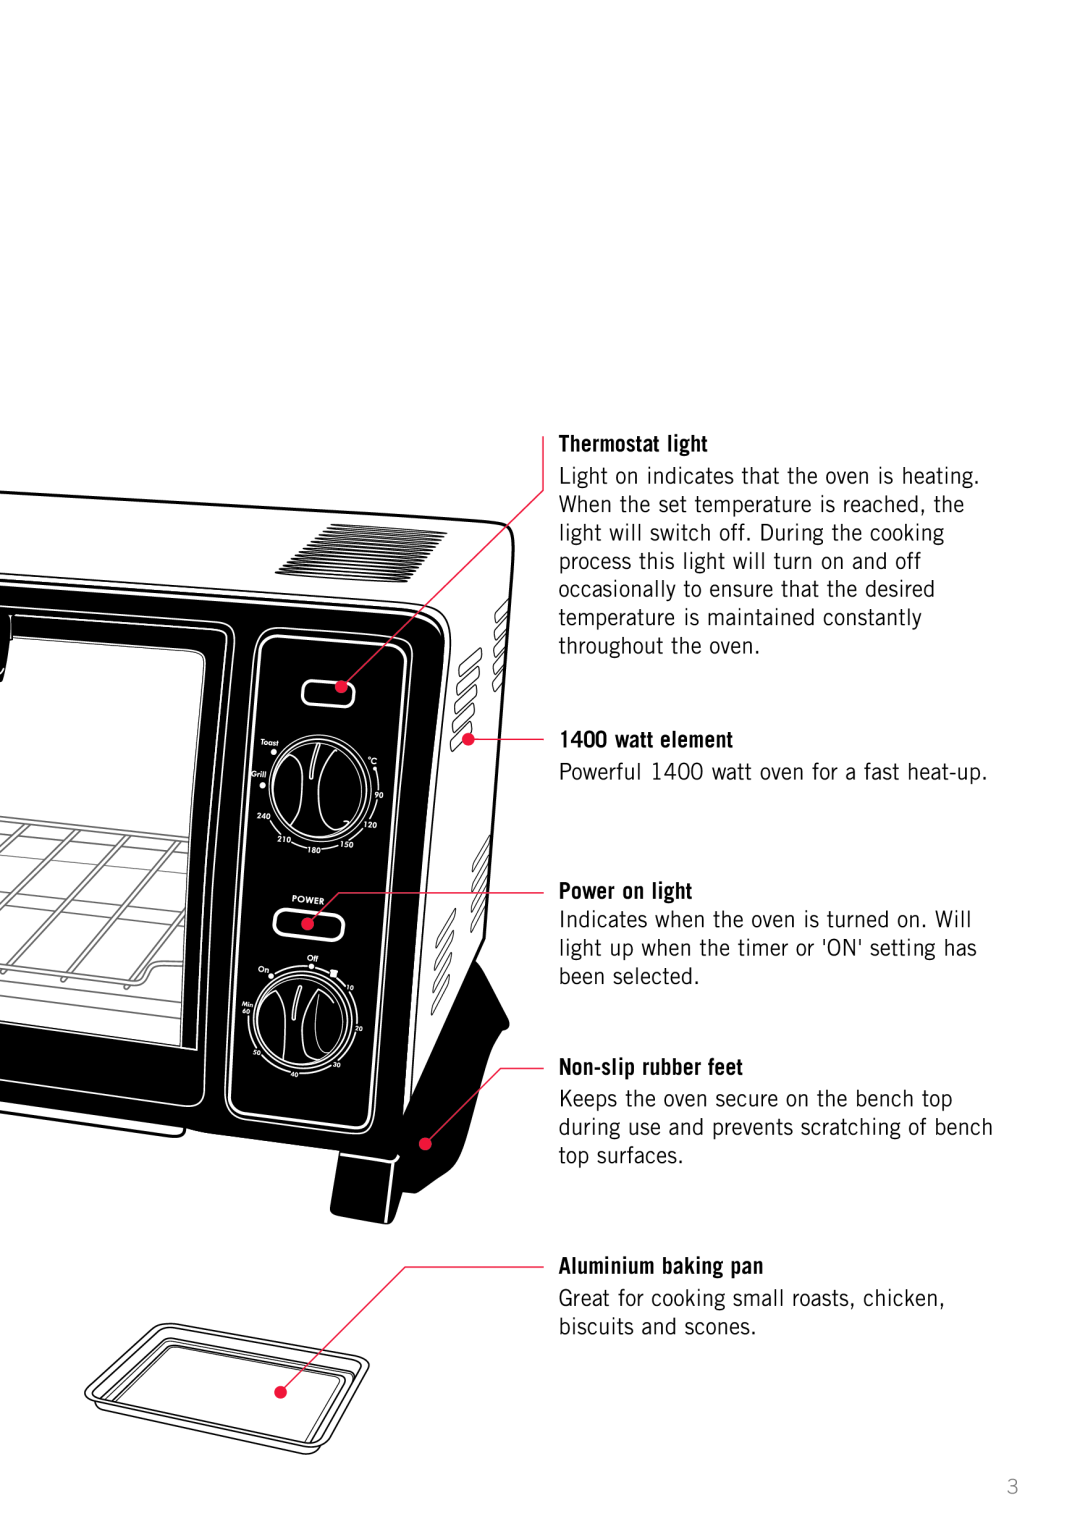 Sunbeam BT2600 manual Thermostat light, watt element, Power on light, Non-slip rubber feet, Aluminium baking pan 